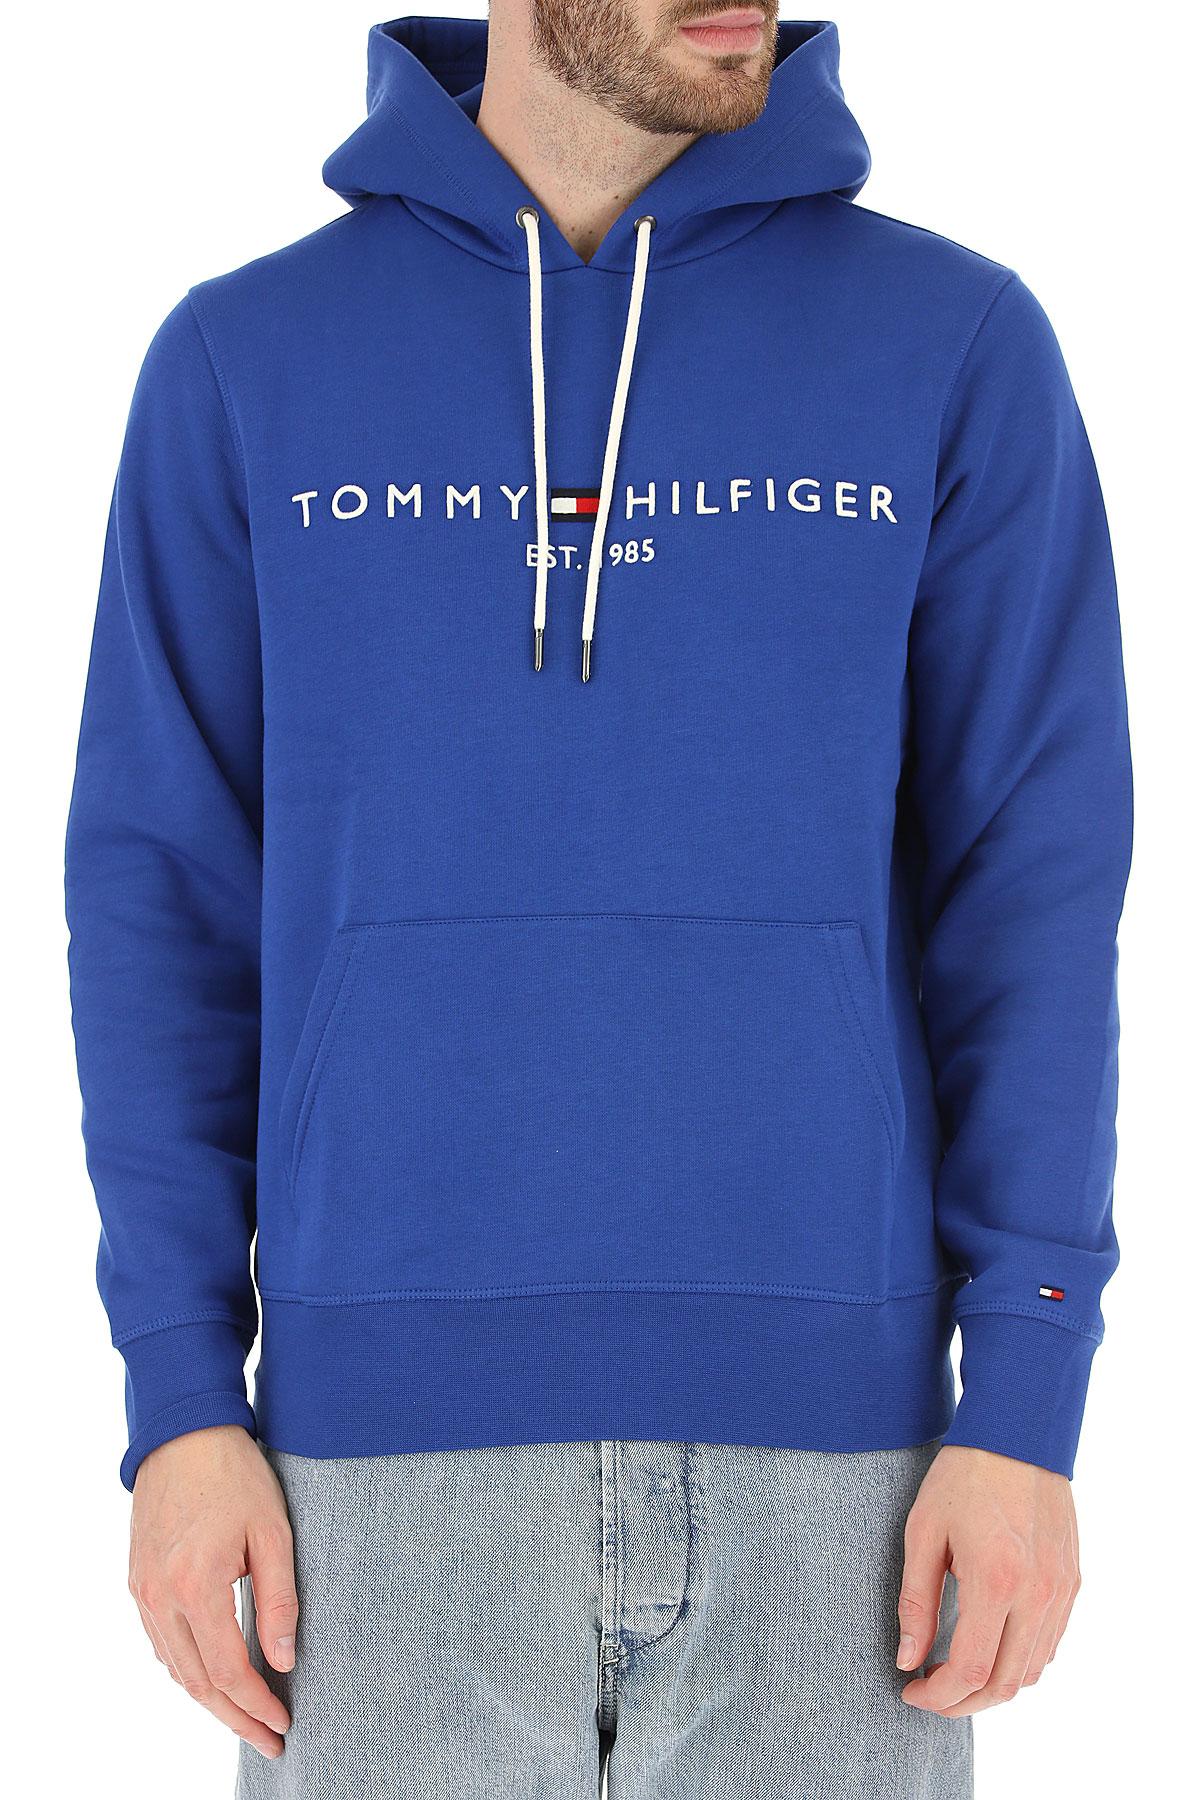 Tommy Hilfiger Sweatshirt For Men in Blue for Men - Lyst